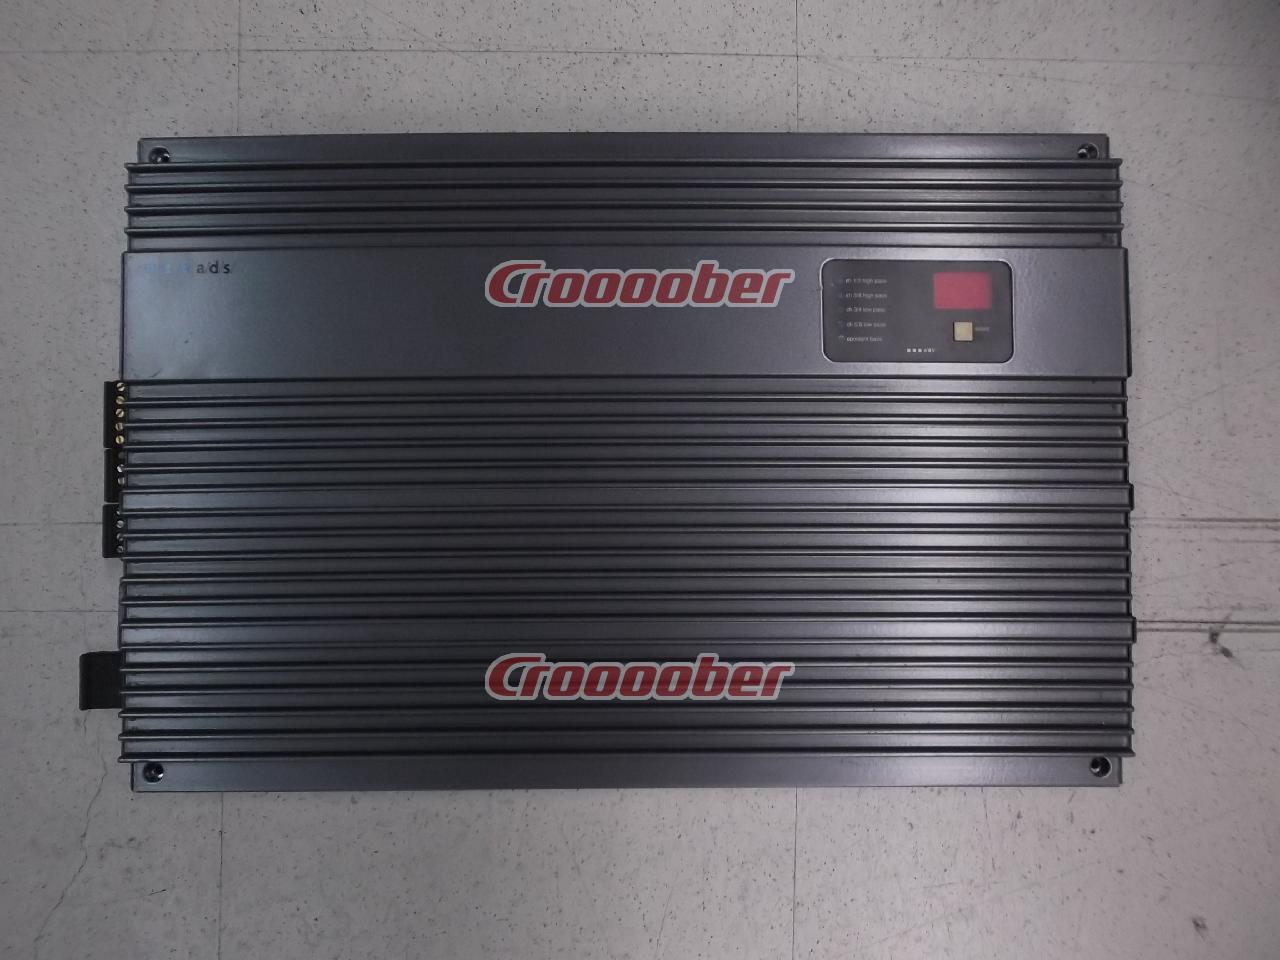 a/d/s/ P240 PowerPlate amplifier original owner's manual